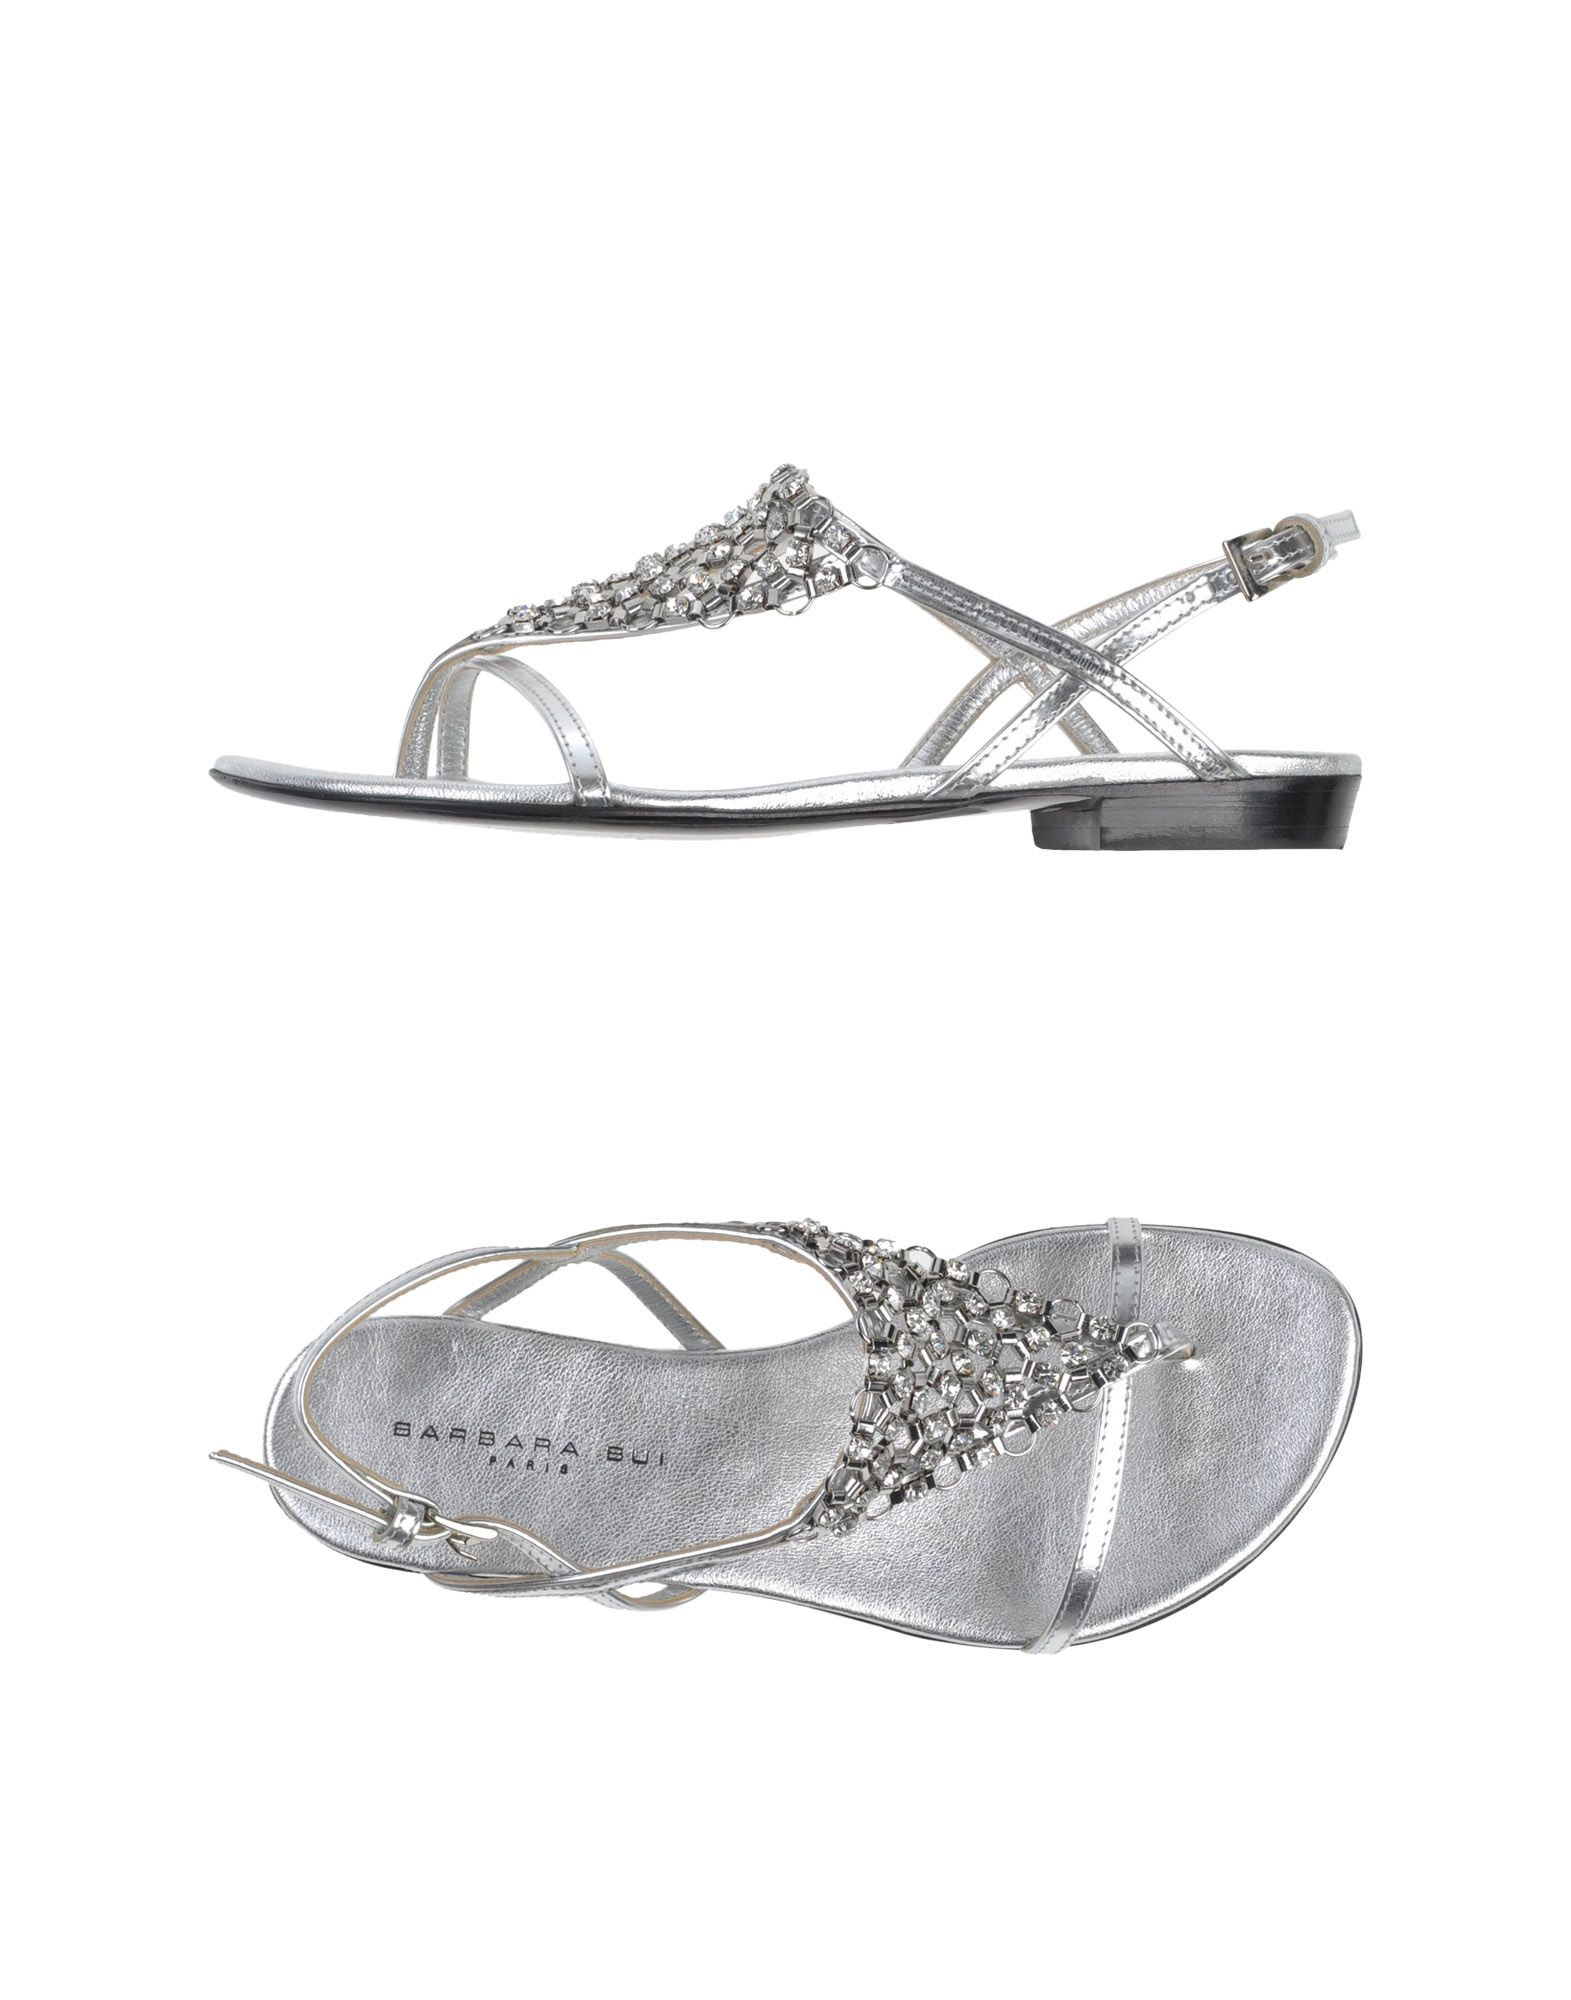 Barbara bui Thong Sandal in Silver | Lyst